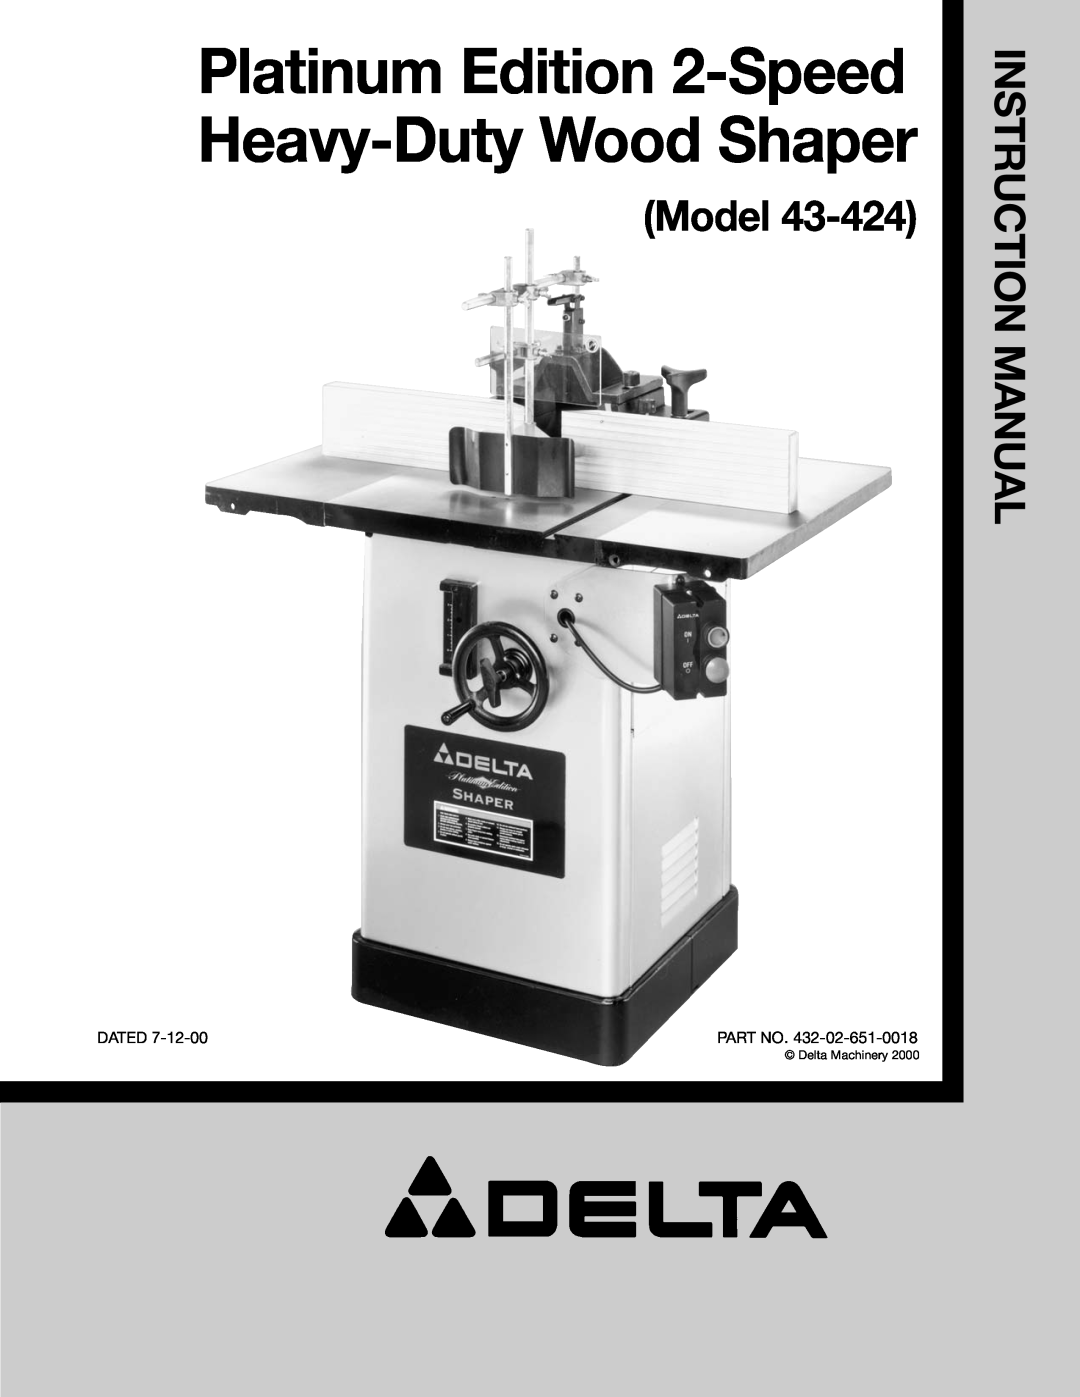 Delta 43-424 instruction manual Platinum Edition 2-Speed Heavy-Duty Wood Shaper, Model, Instruction Manual, Dated 